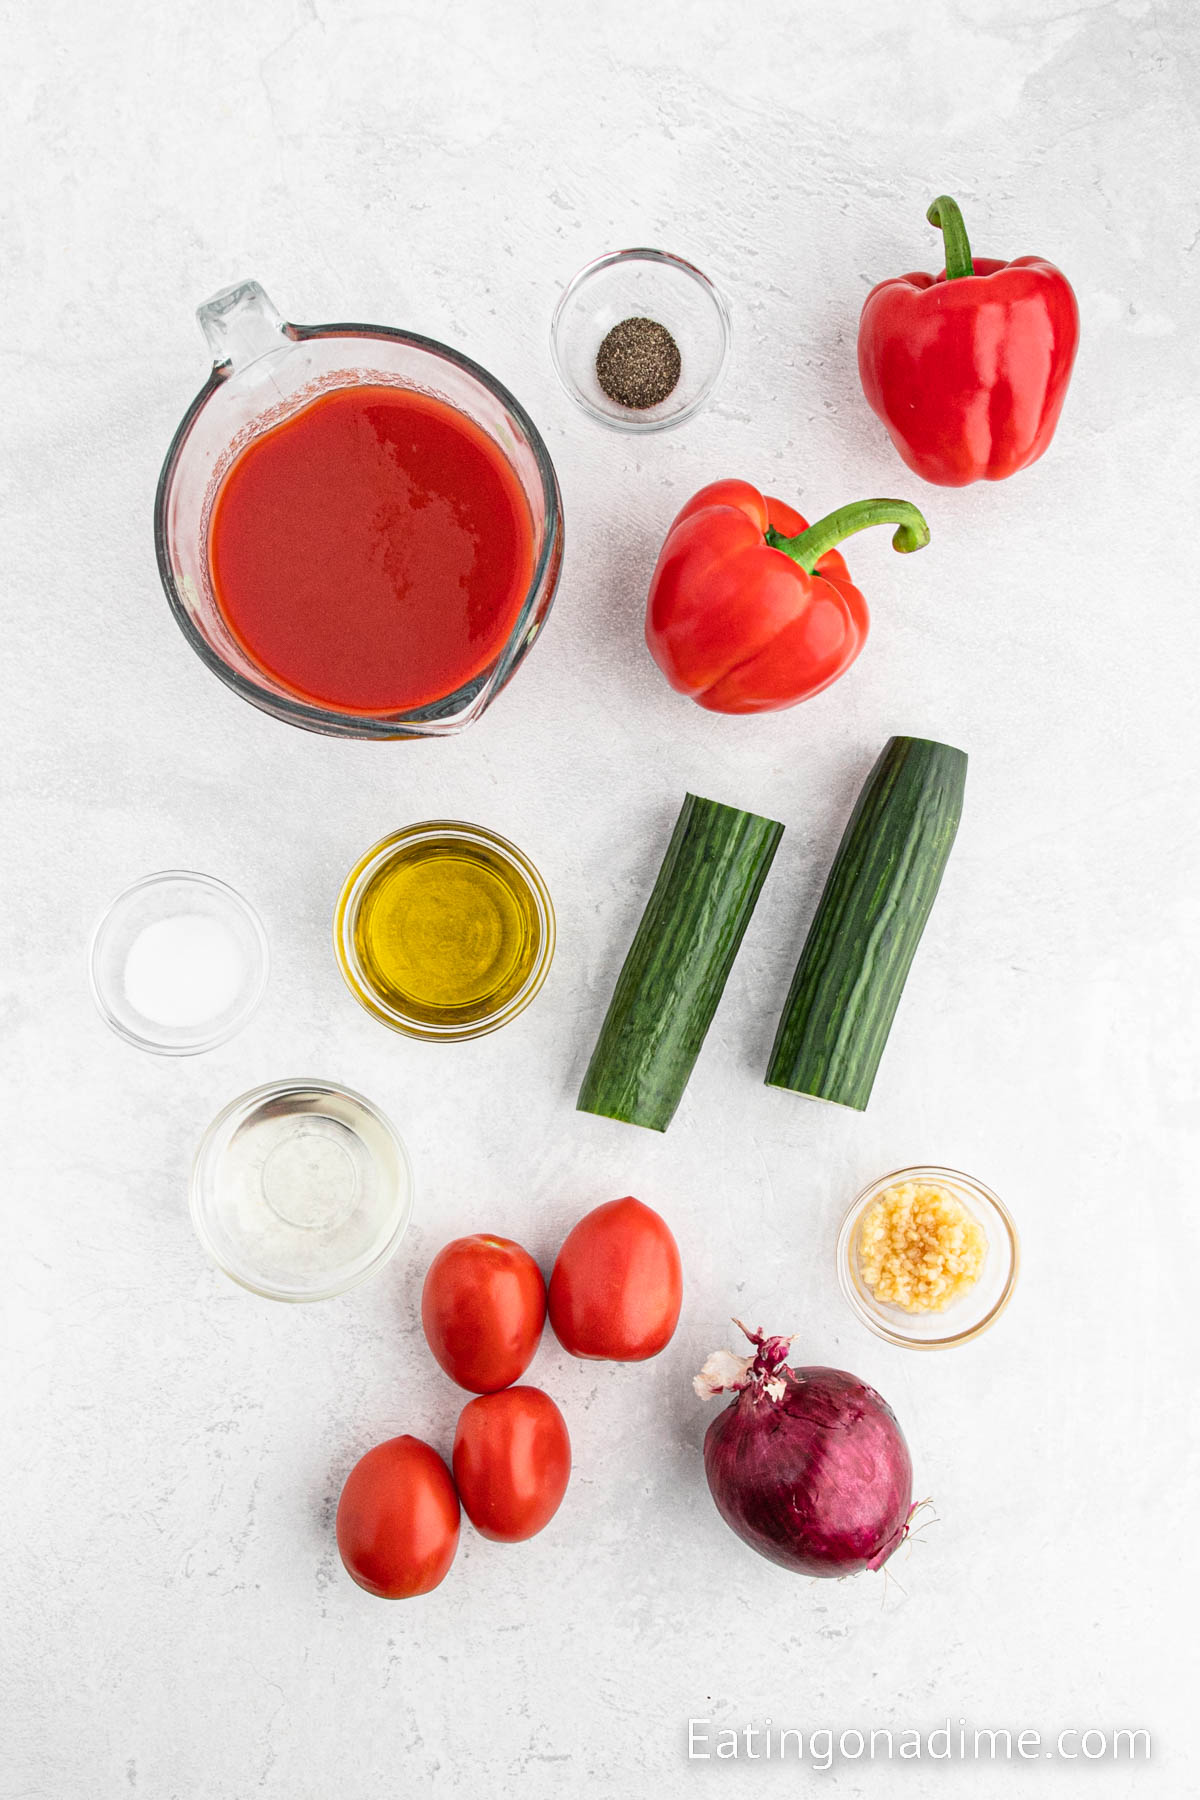 English Cucumber, bell pepper, tomatoes, red onion, garlic, tomato juice, vinegar, olive oil, salt, pepper